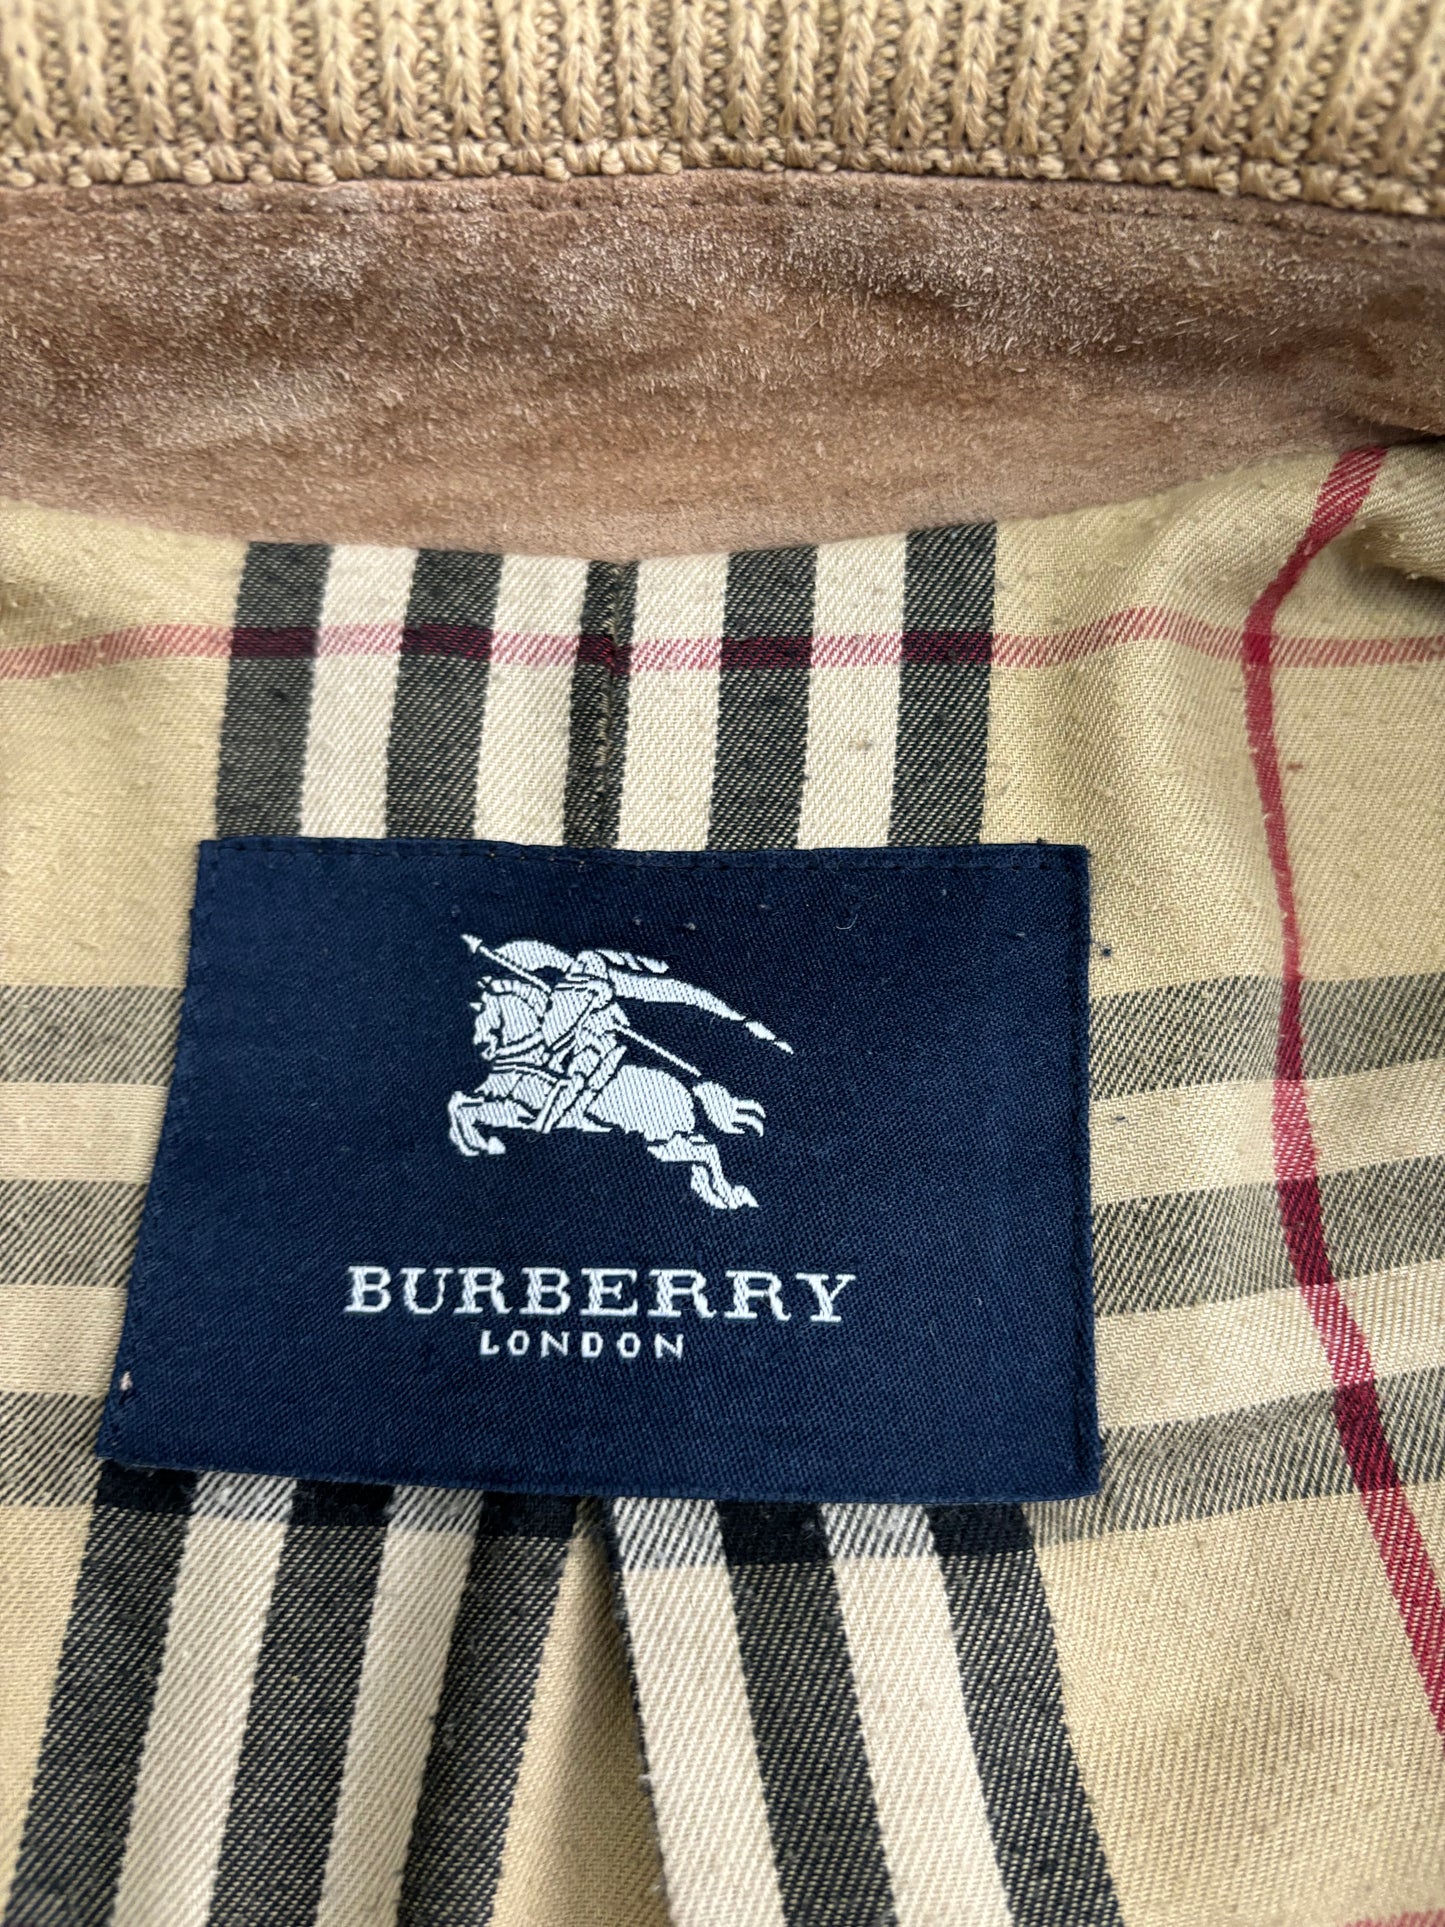 Burberry 80's Vintage Suede Coat - M